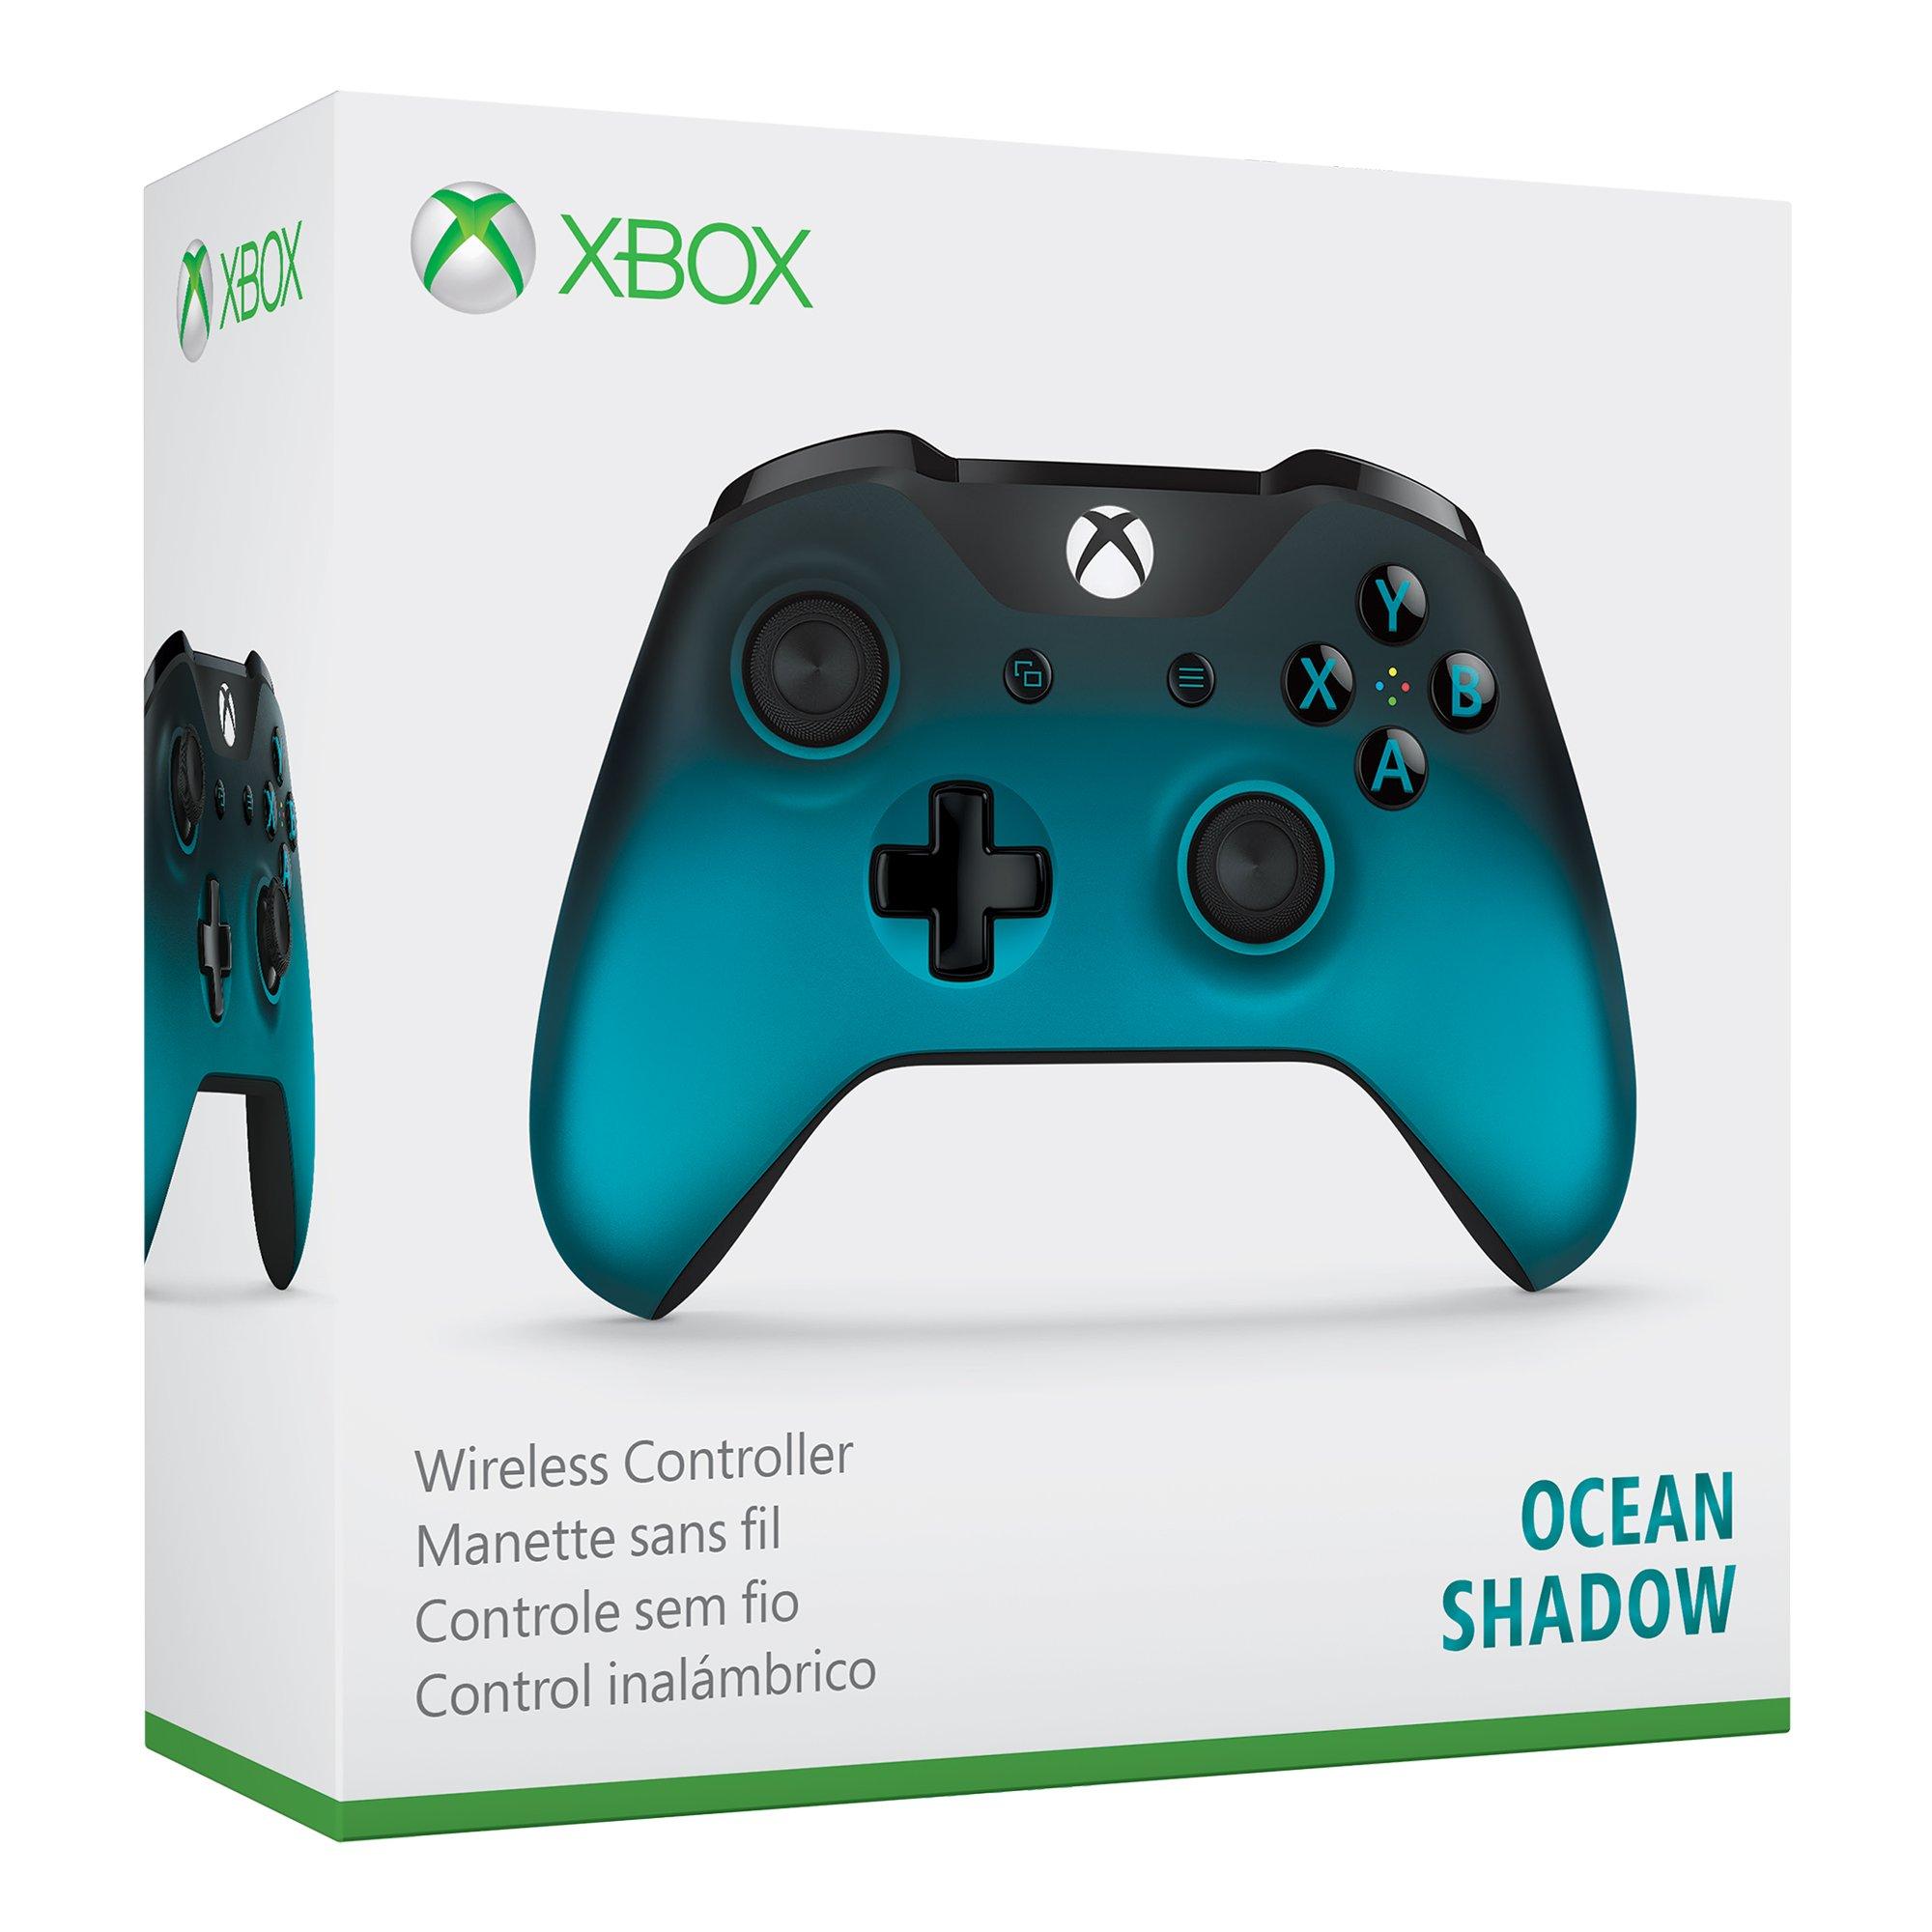 ocean games xbox one